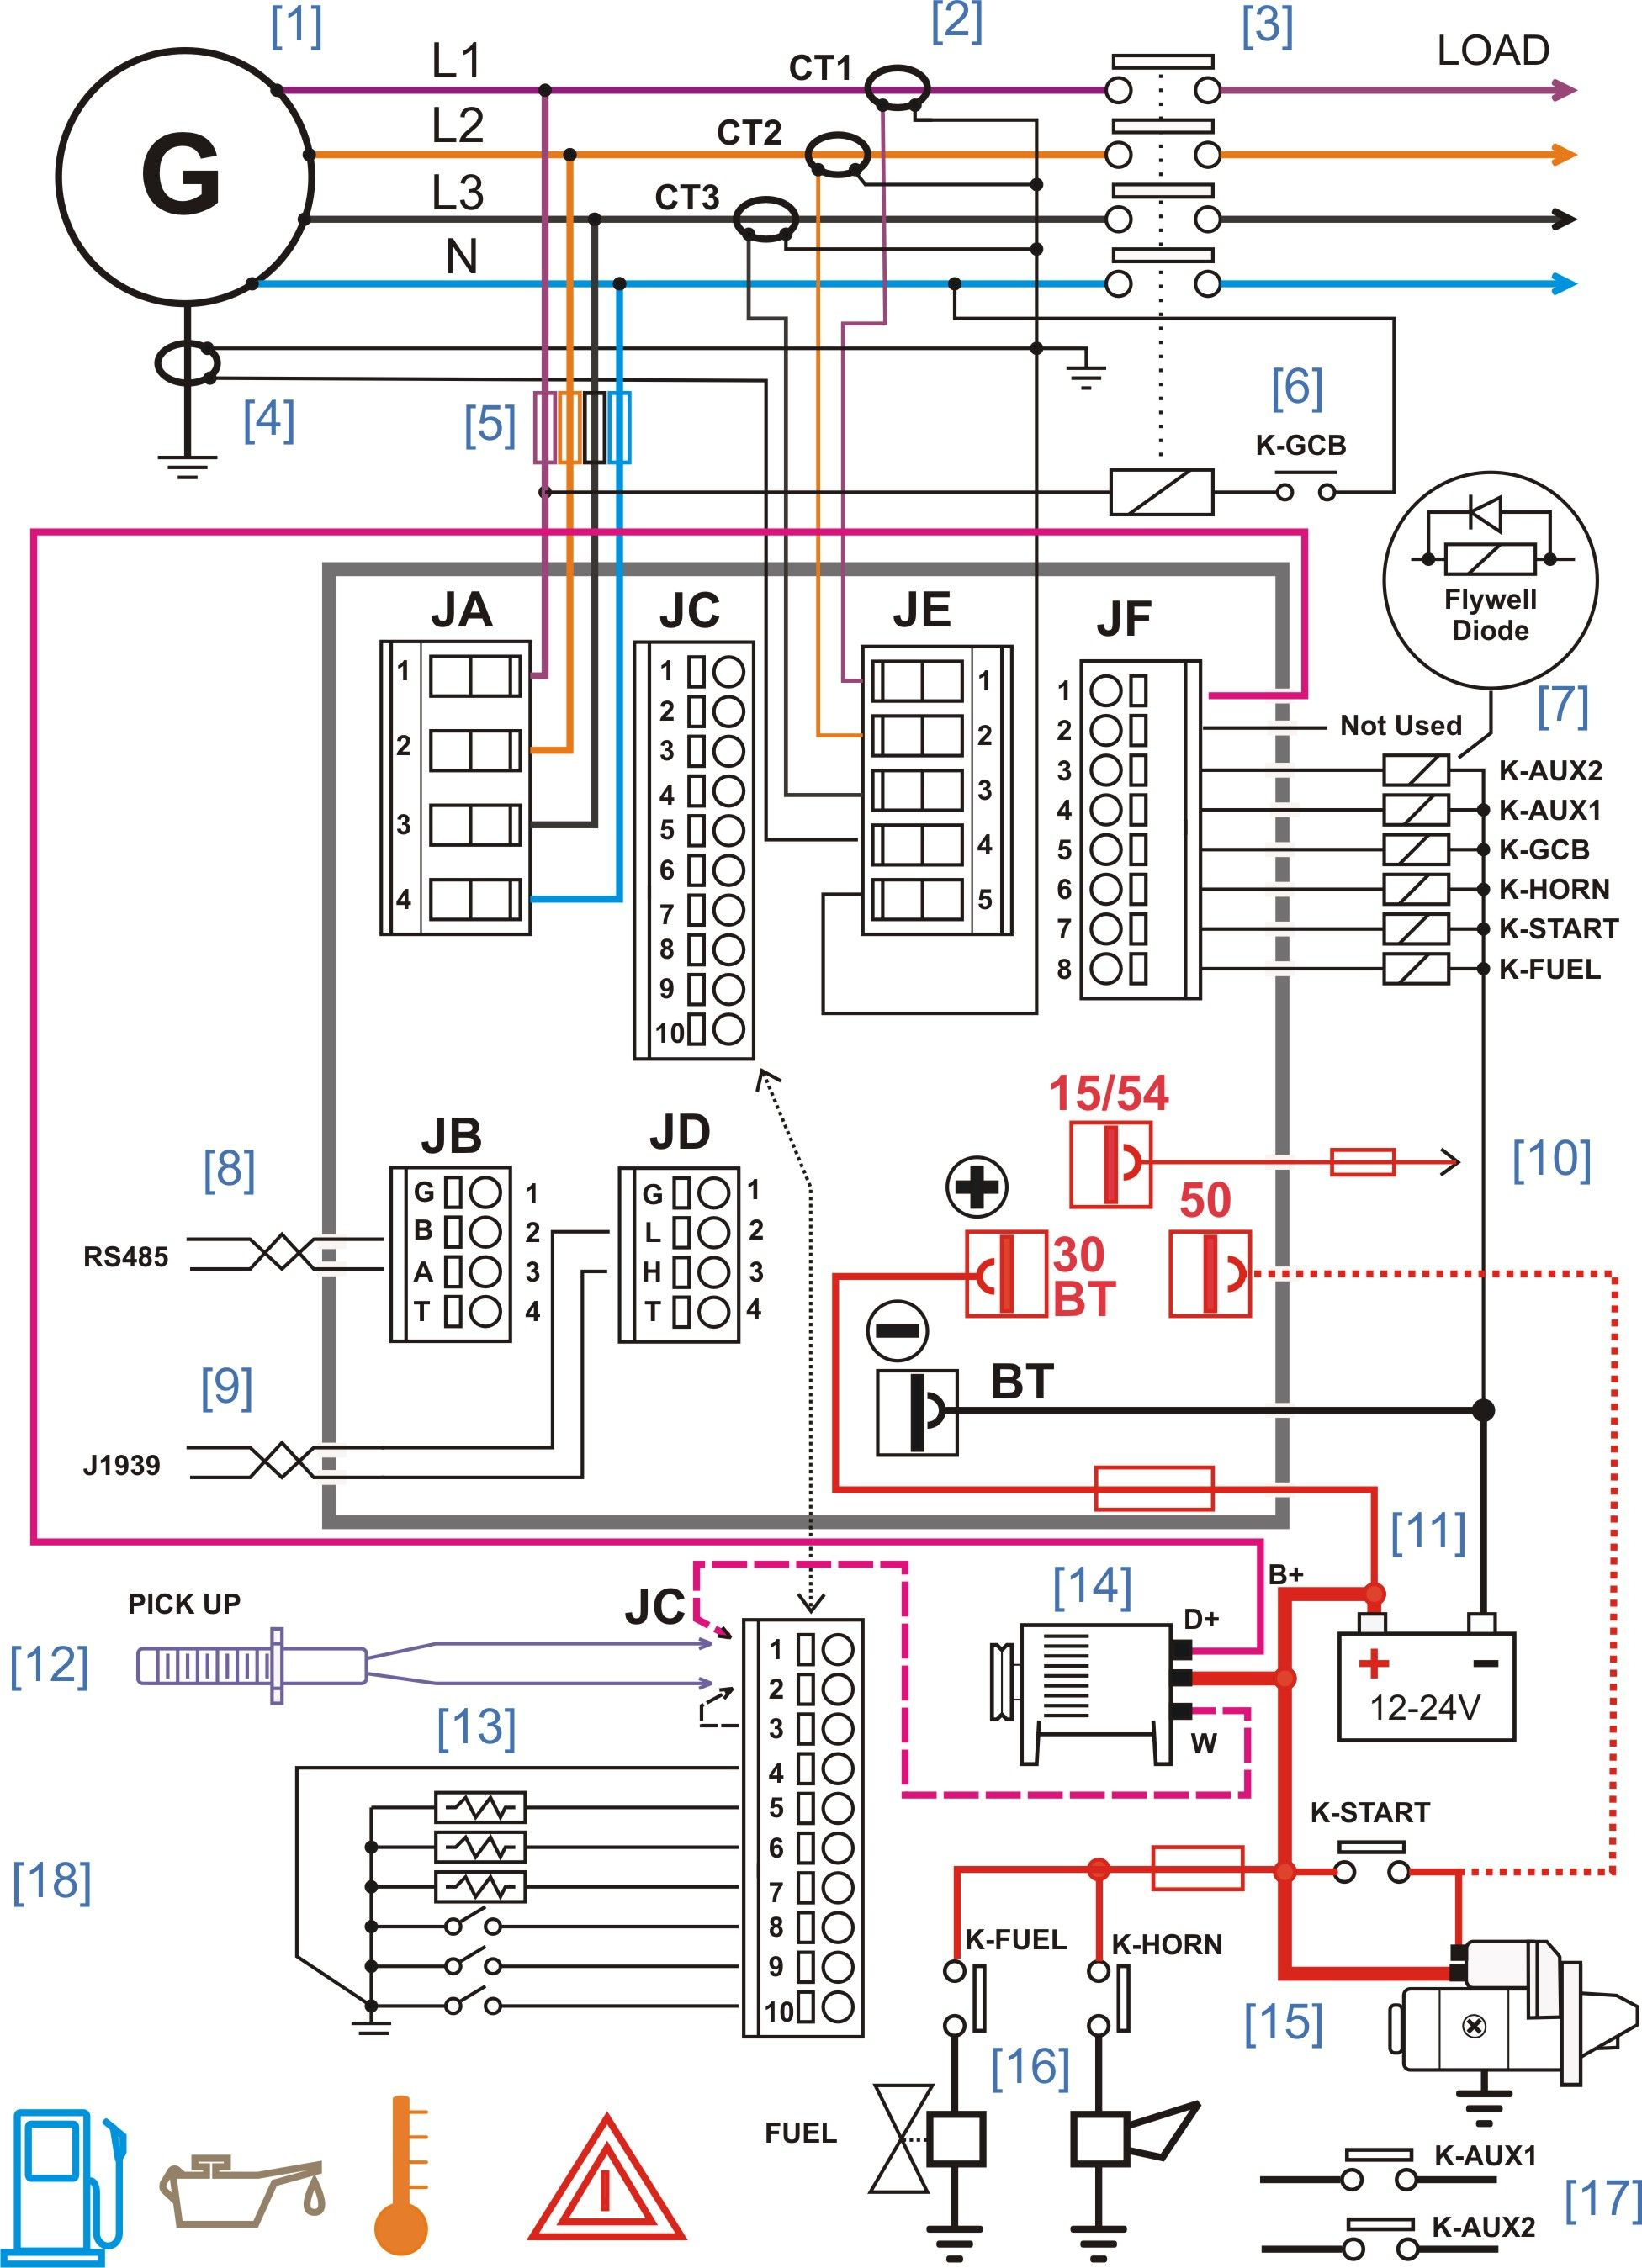 Panel Wiring Diagram - Today Wiring Diagram - Electrical Sub Panel Wiring Diagram